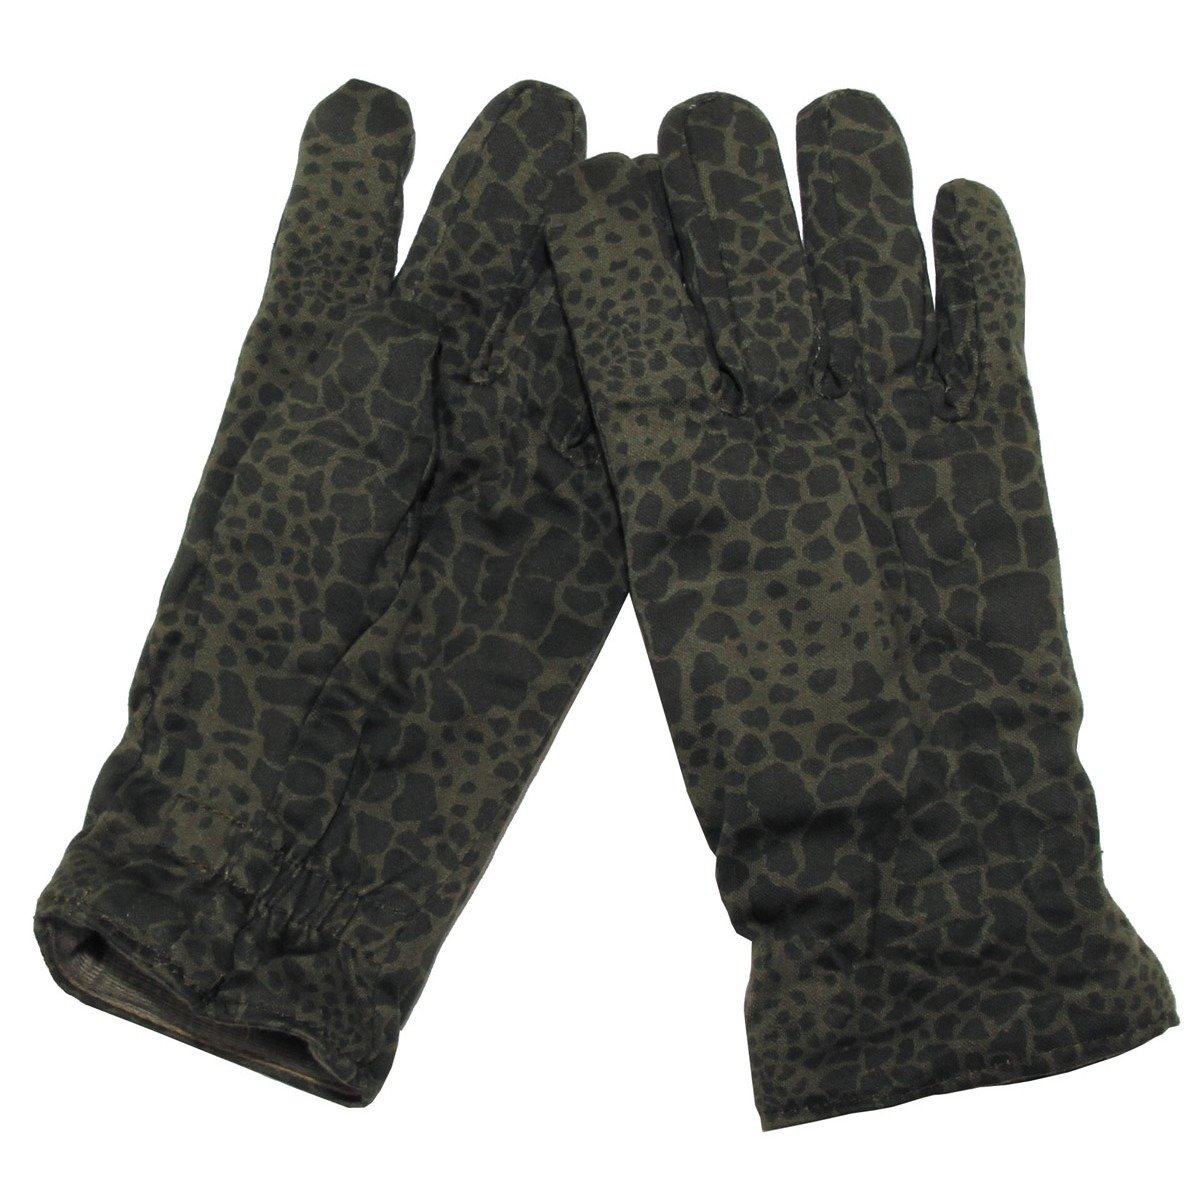 puma new gloves